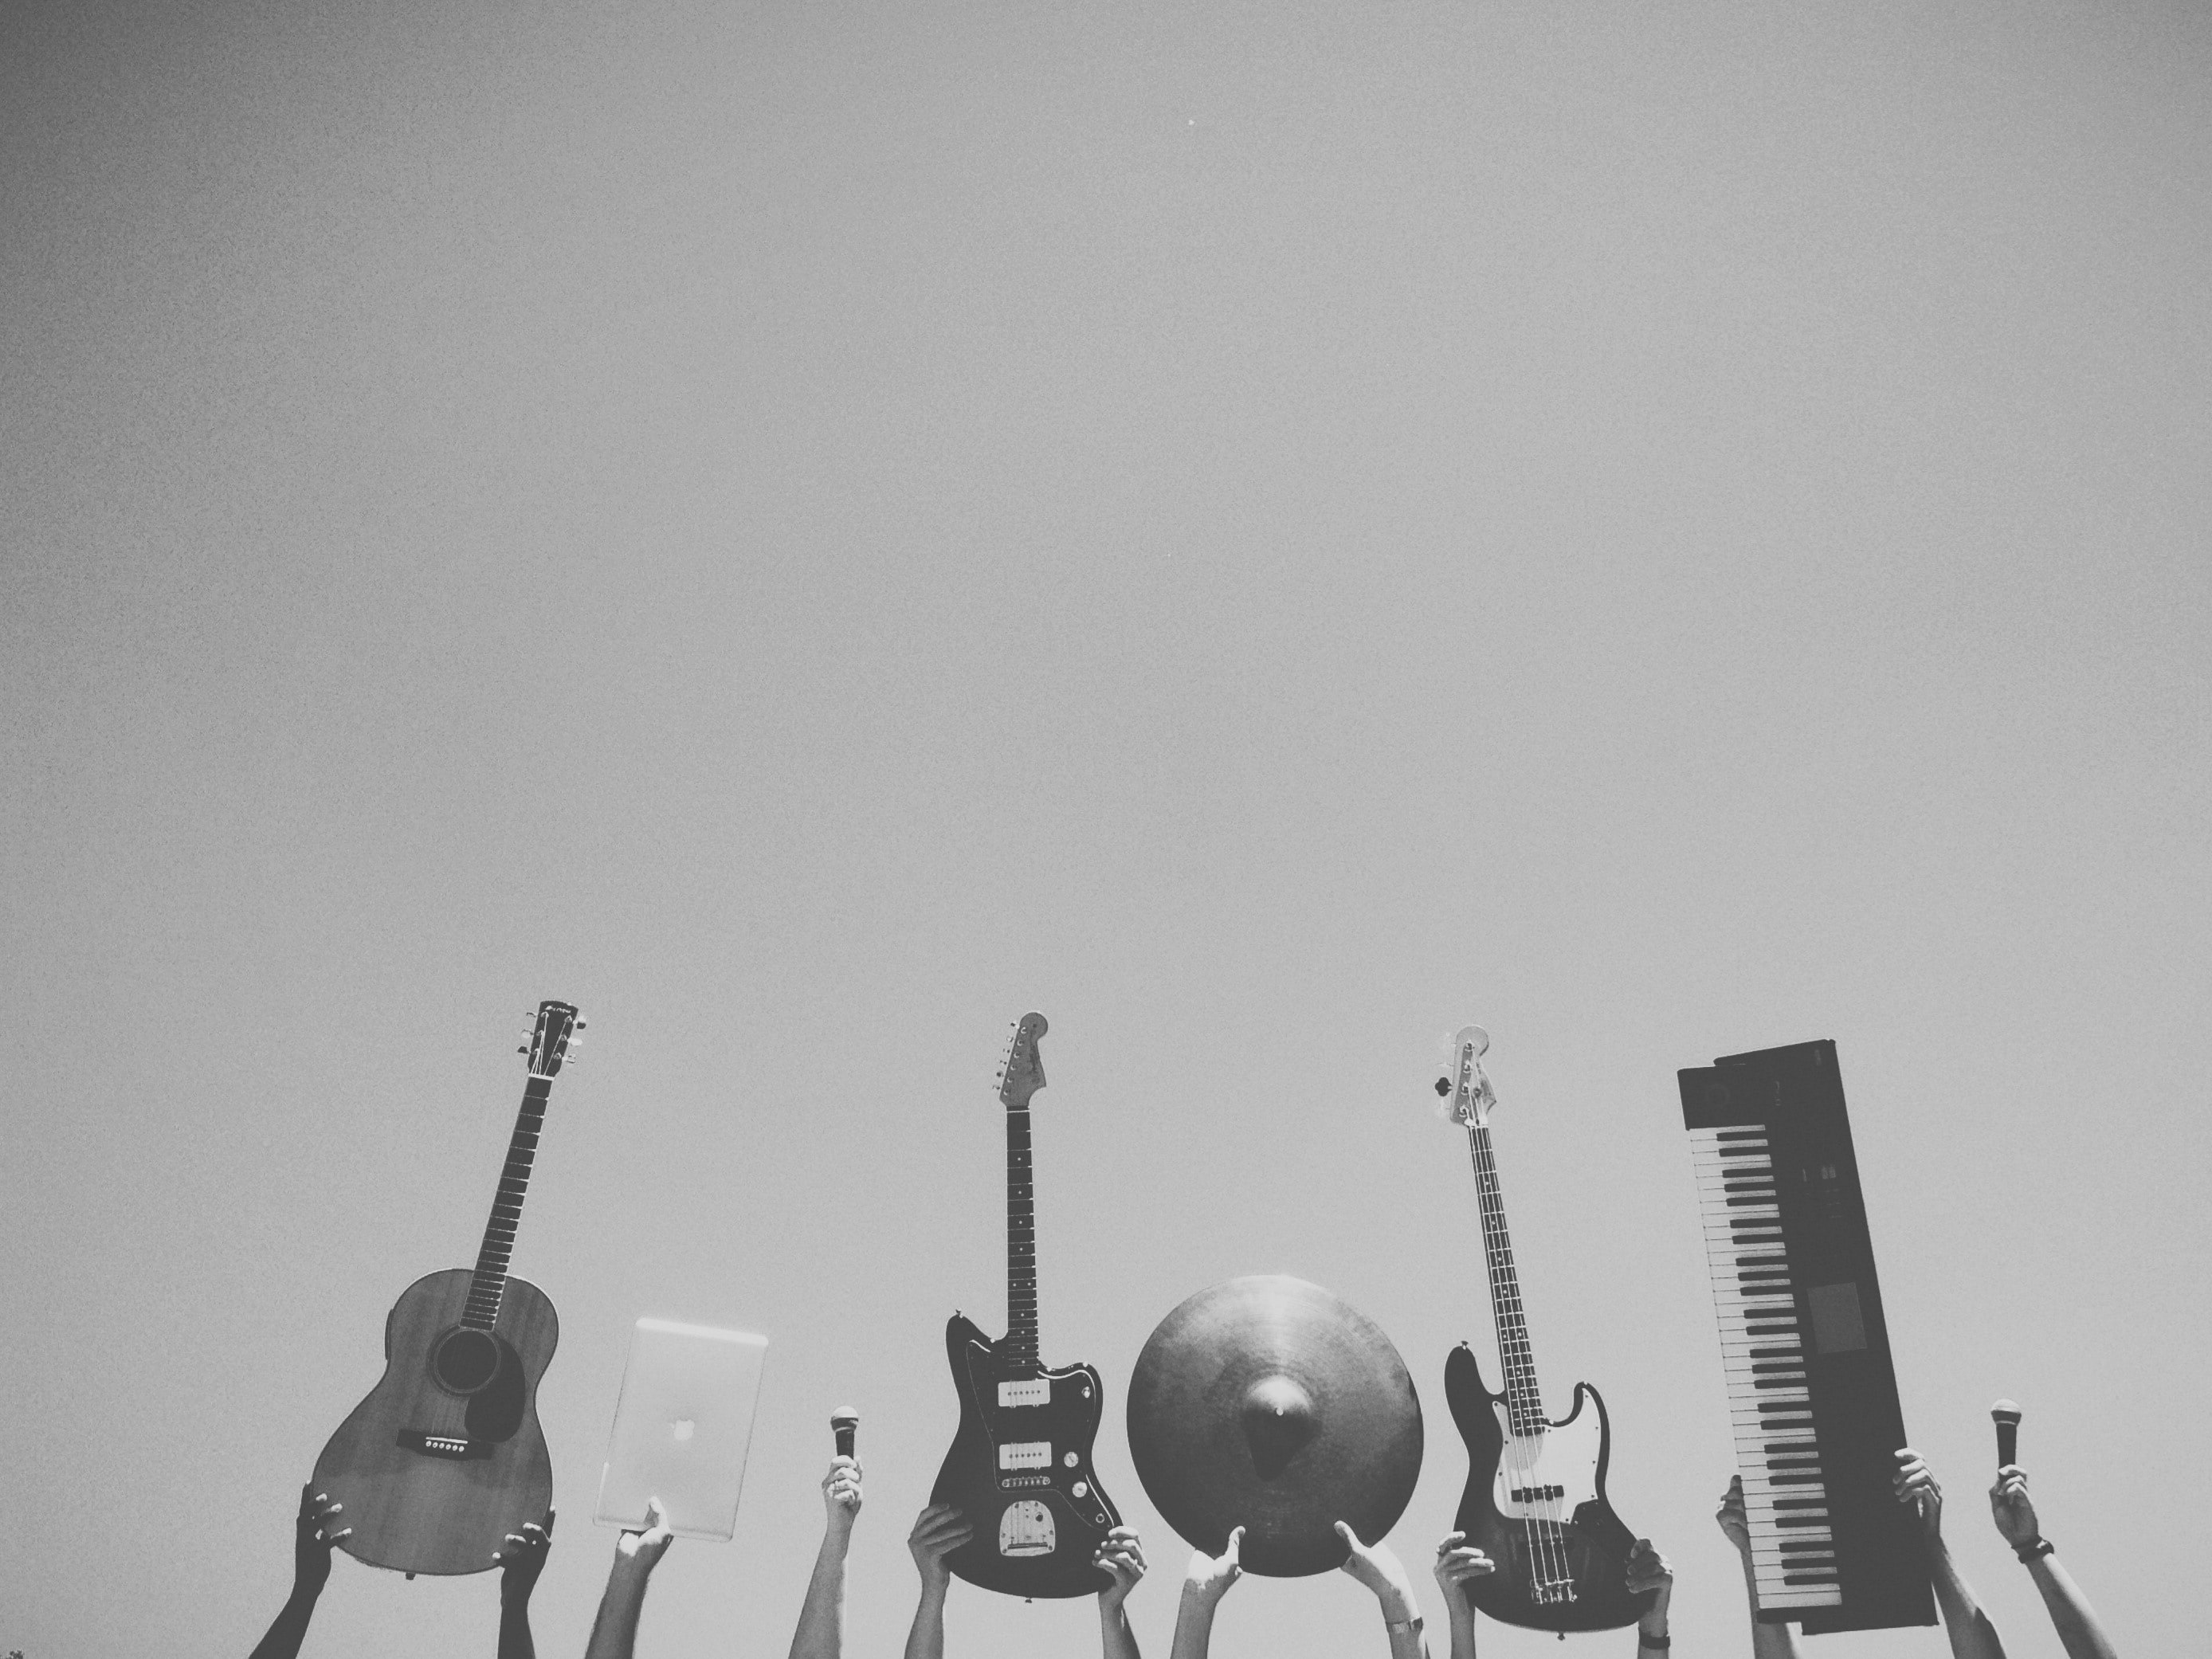 Forskellige musikinstrumenter